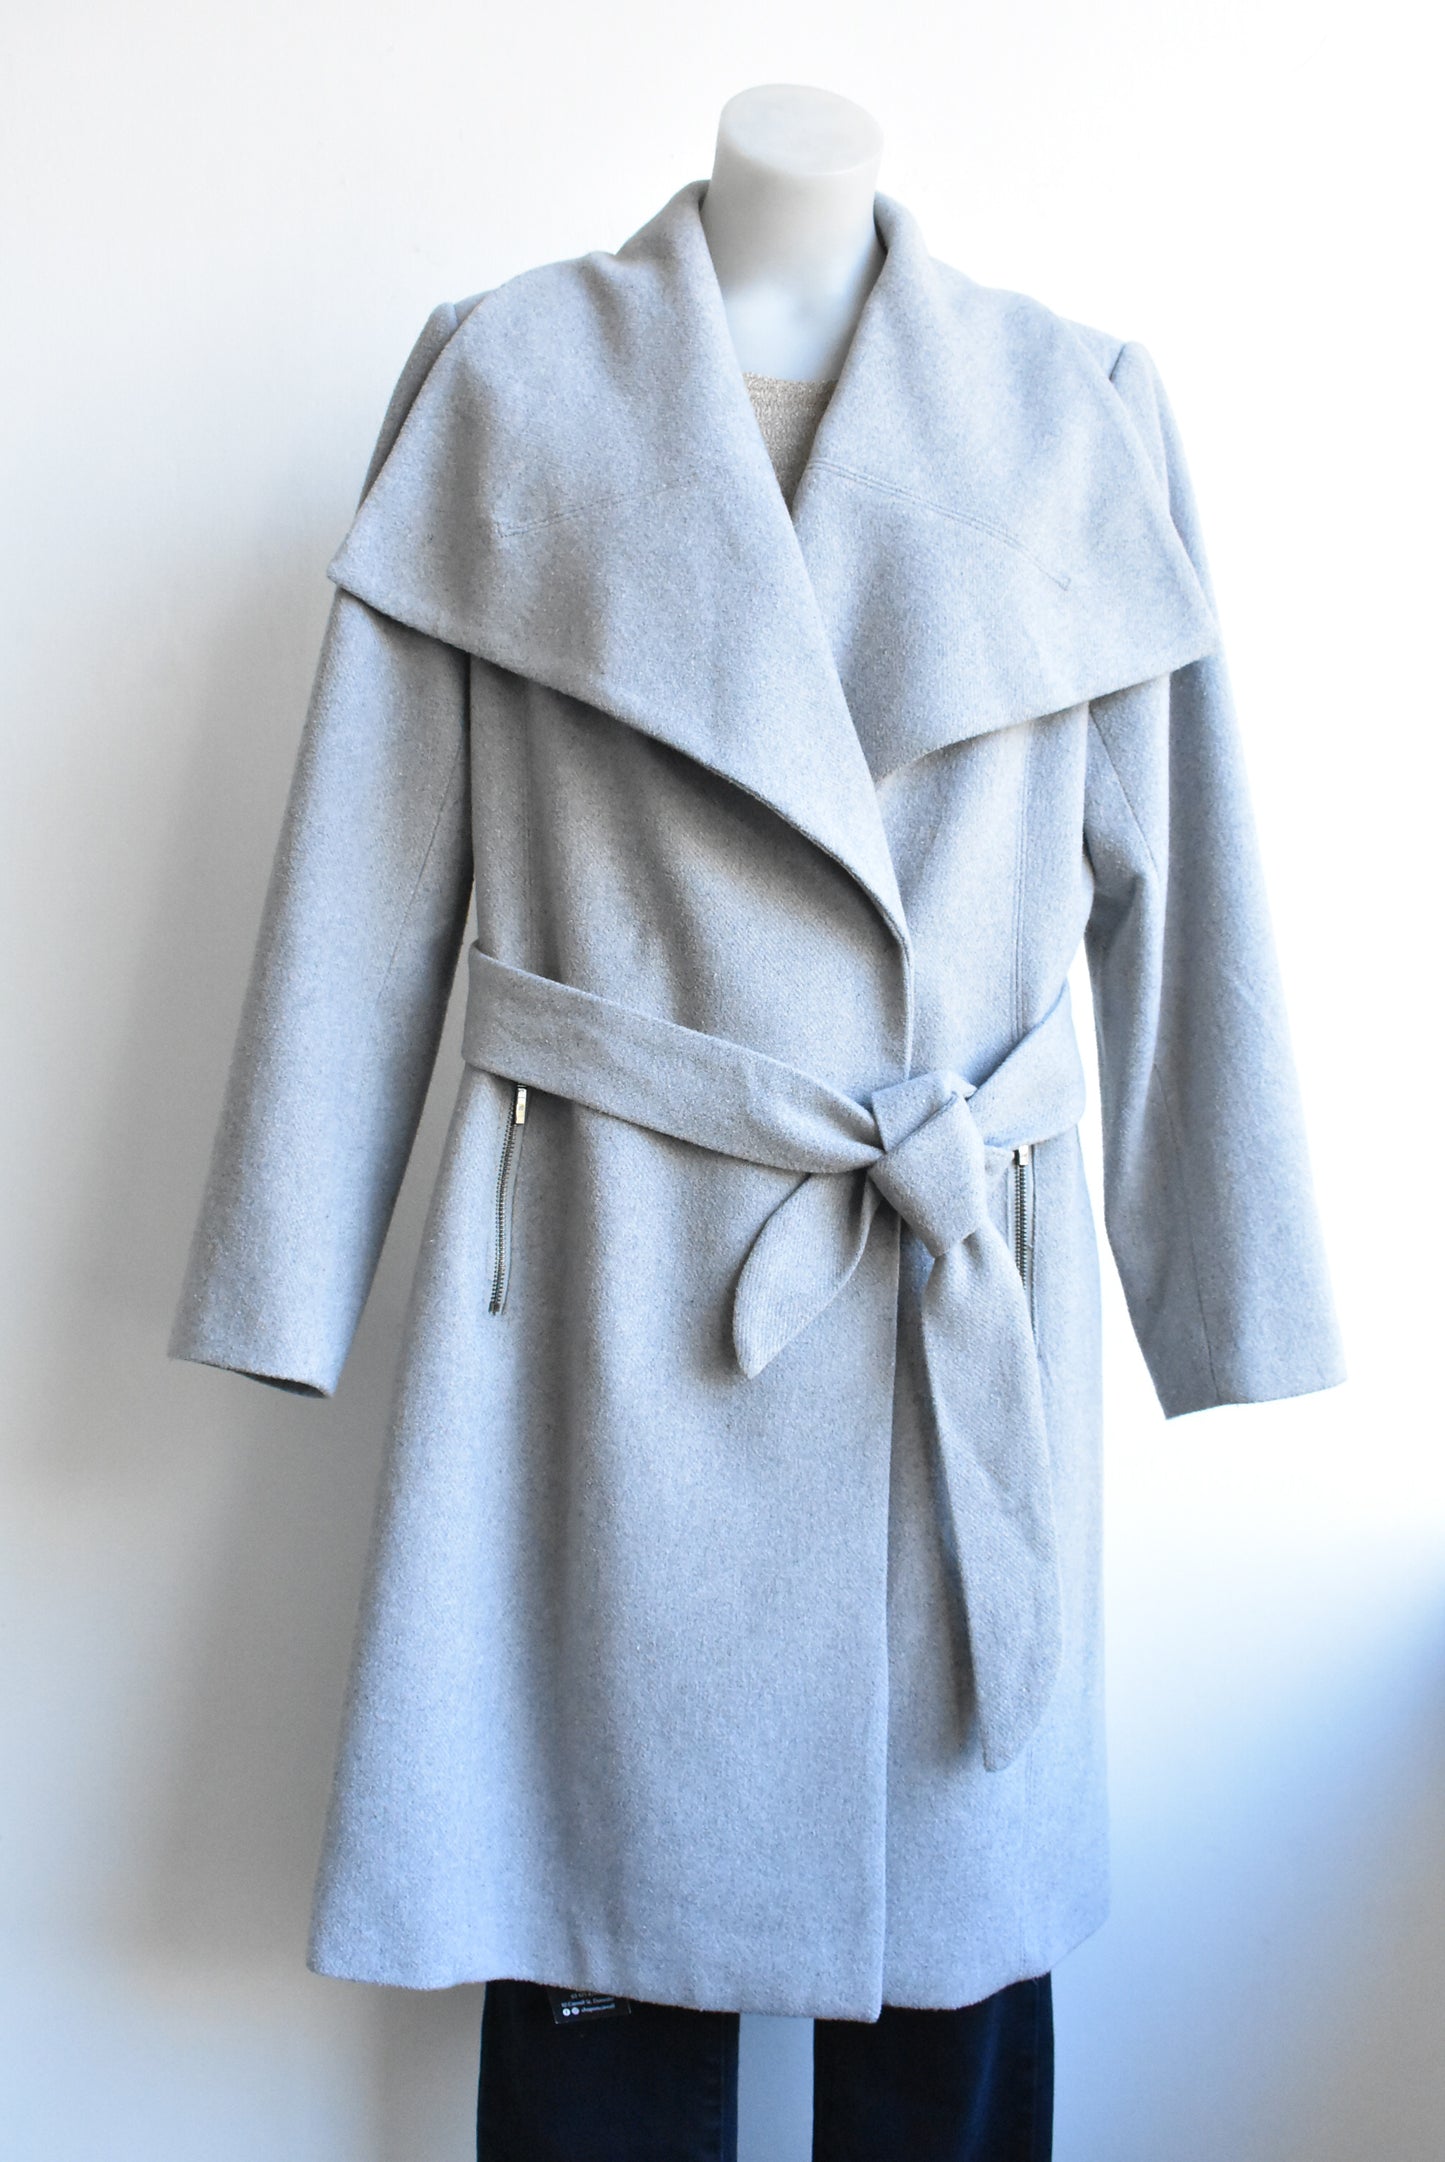 Whistle warm grey coat with belt,16